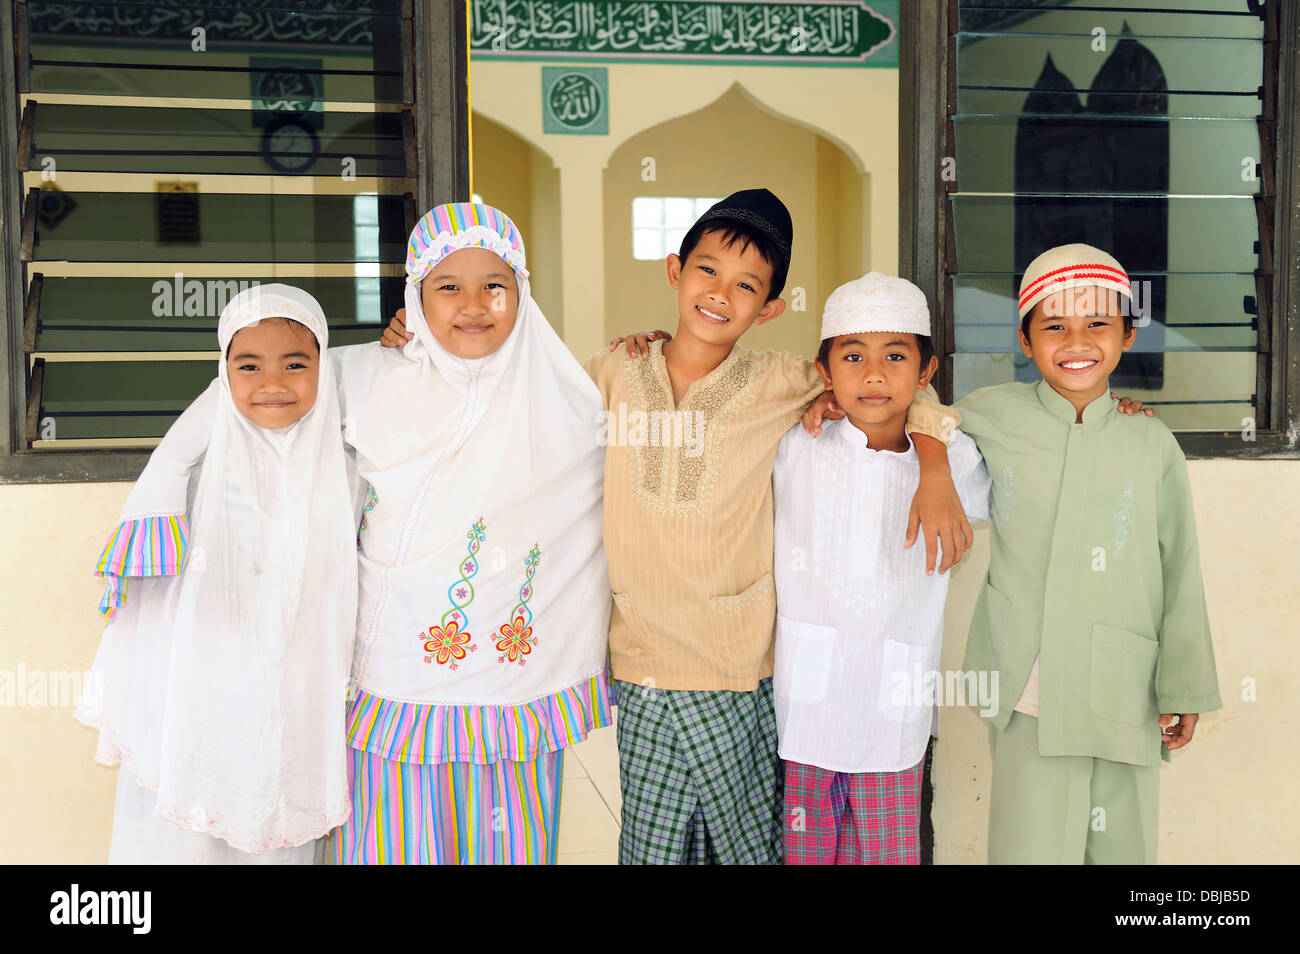 Group of happy Muslim kids Stock Photo: 58796233 - Alamy